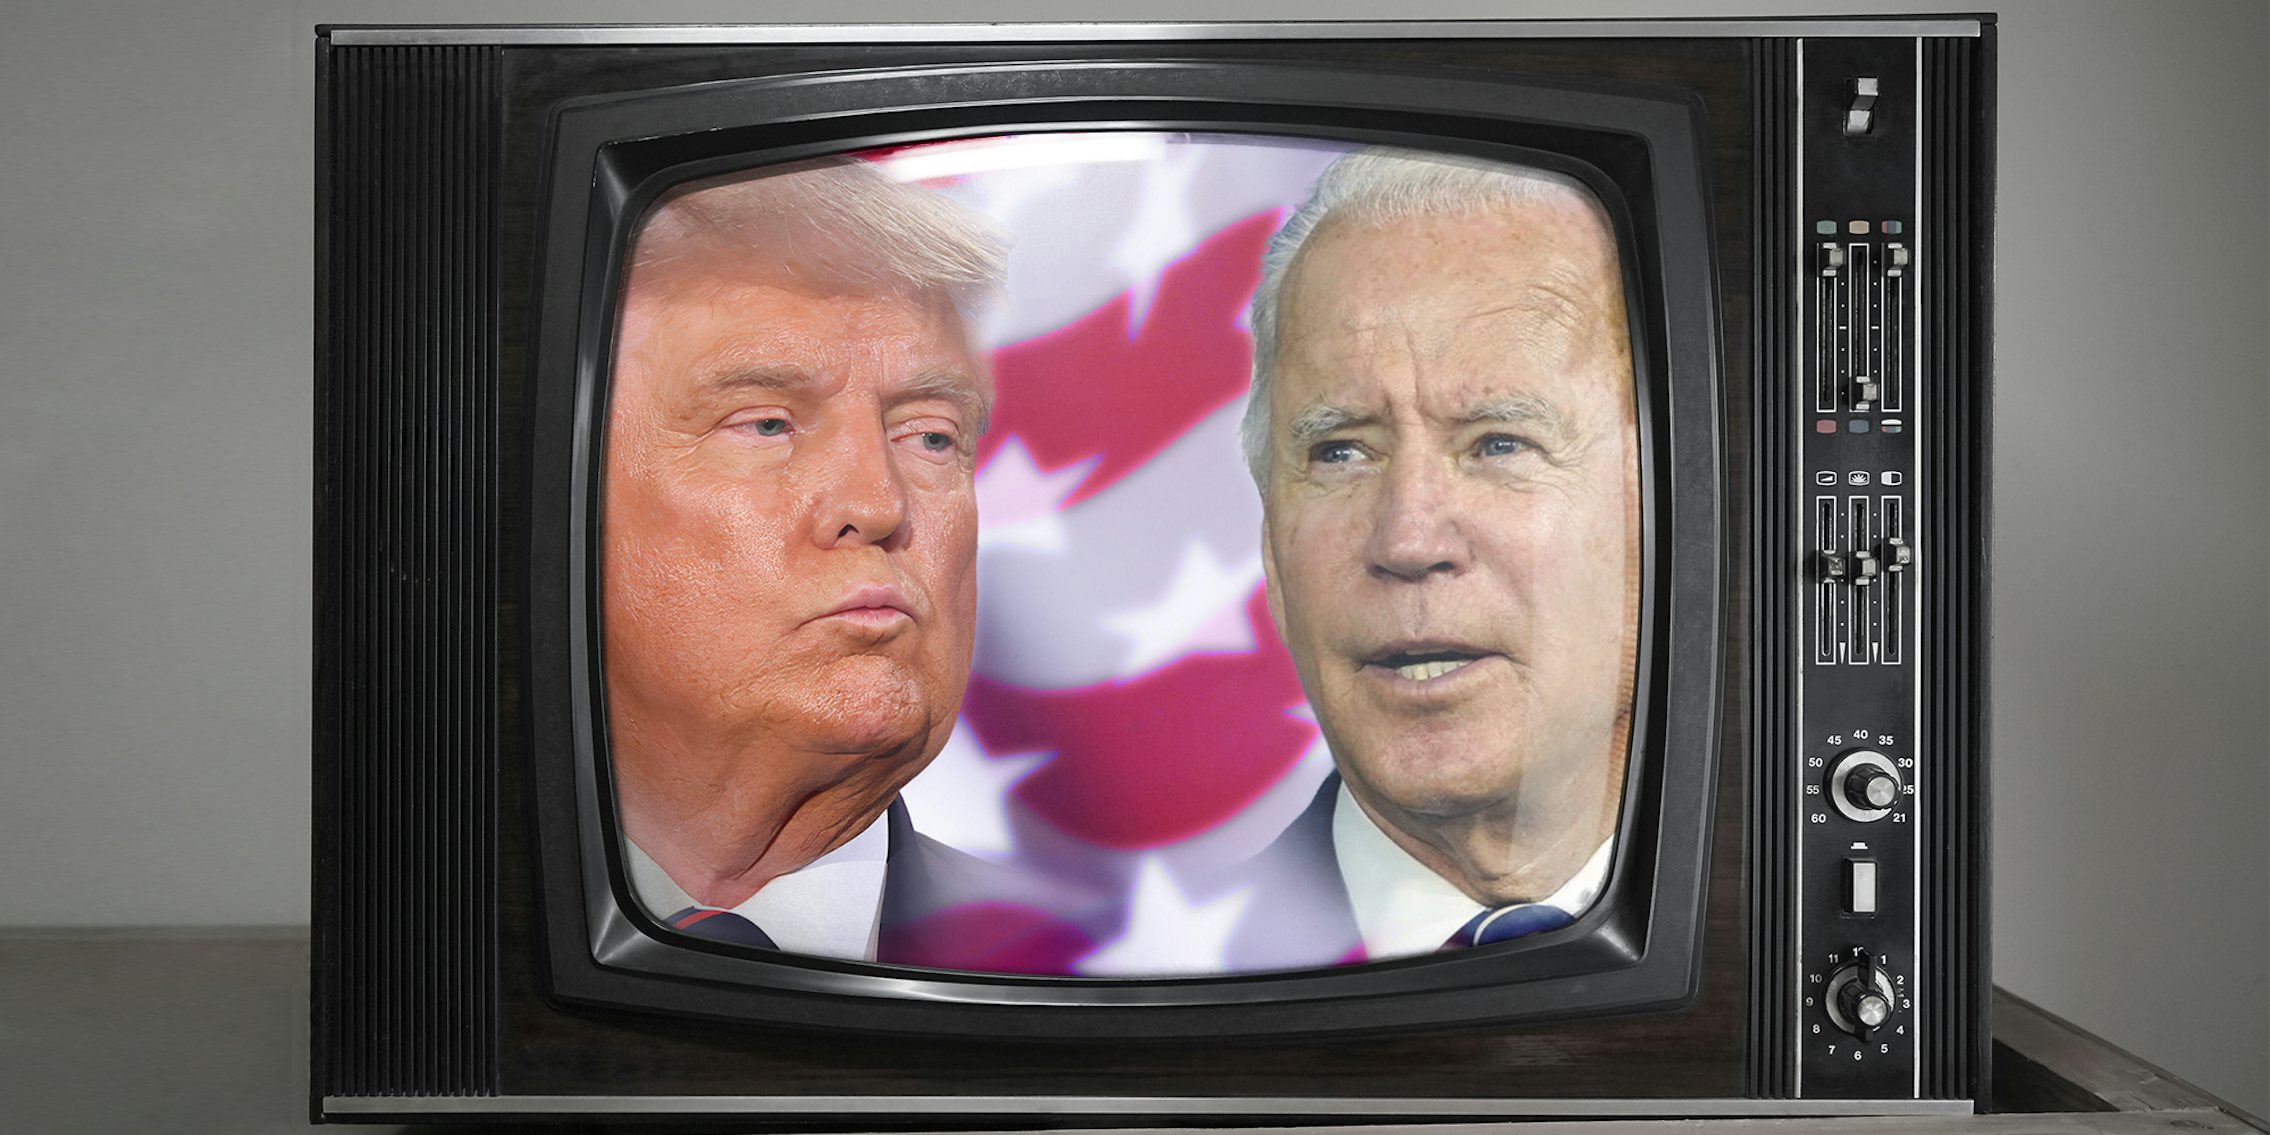 donald trump and joe biden on an old television set